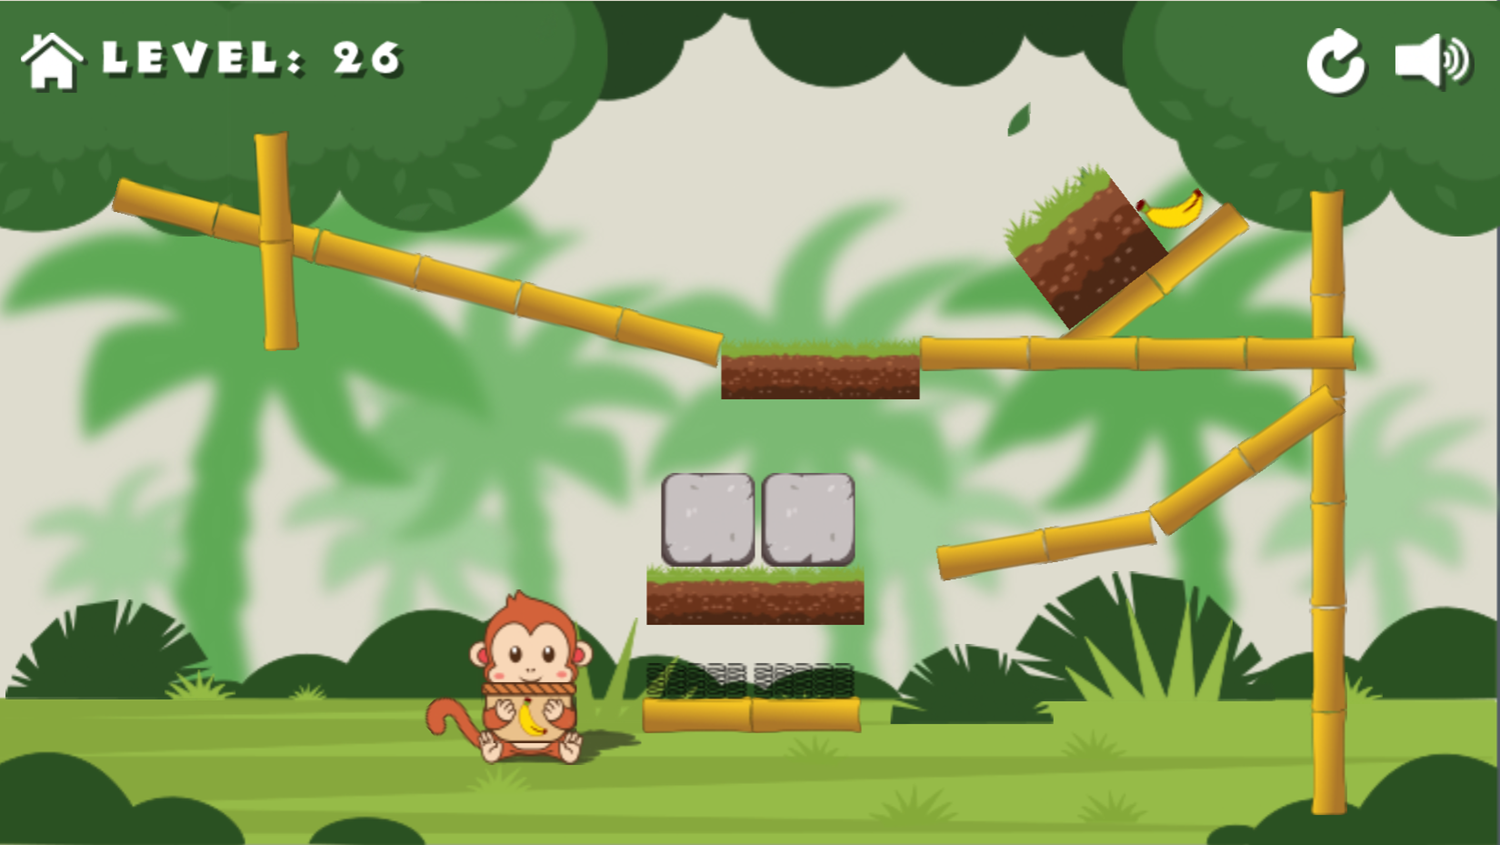 Monkeys and Fruits Game Level With Stone Blocks Screenshot.